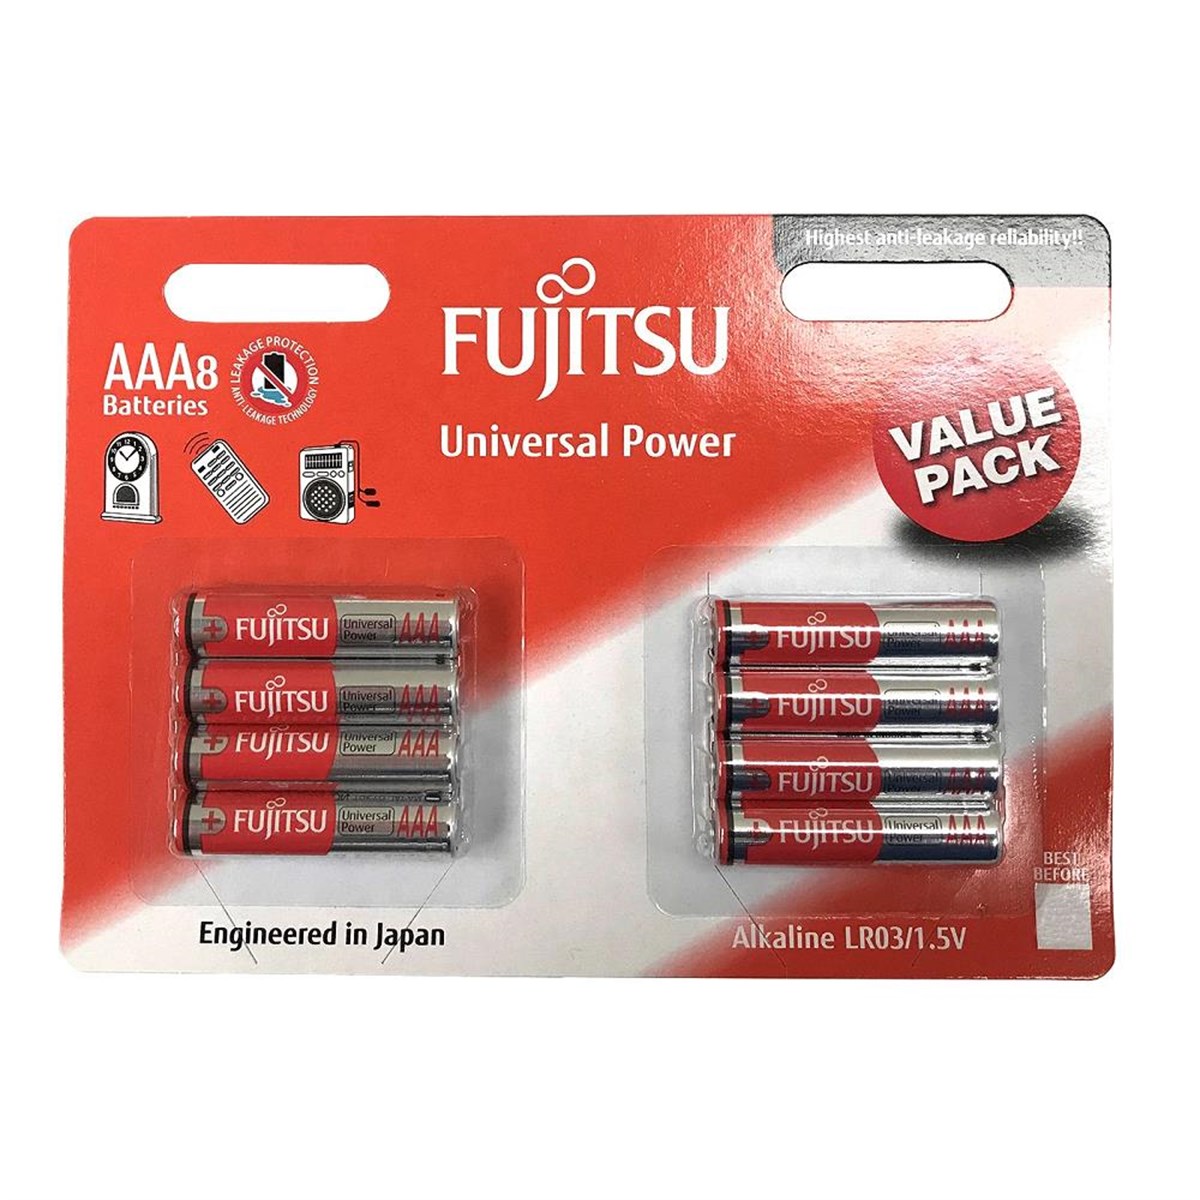 Fujitsu Universal Power LR03 Alkaline AAA İnce Kalem Pil 8'Lİ Paket